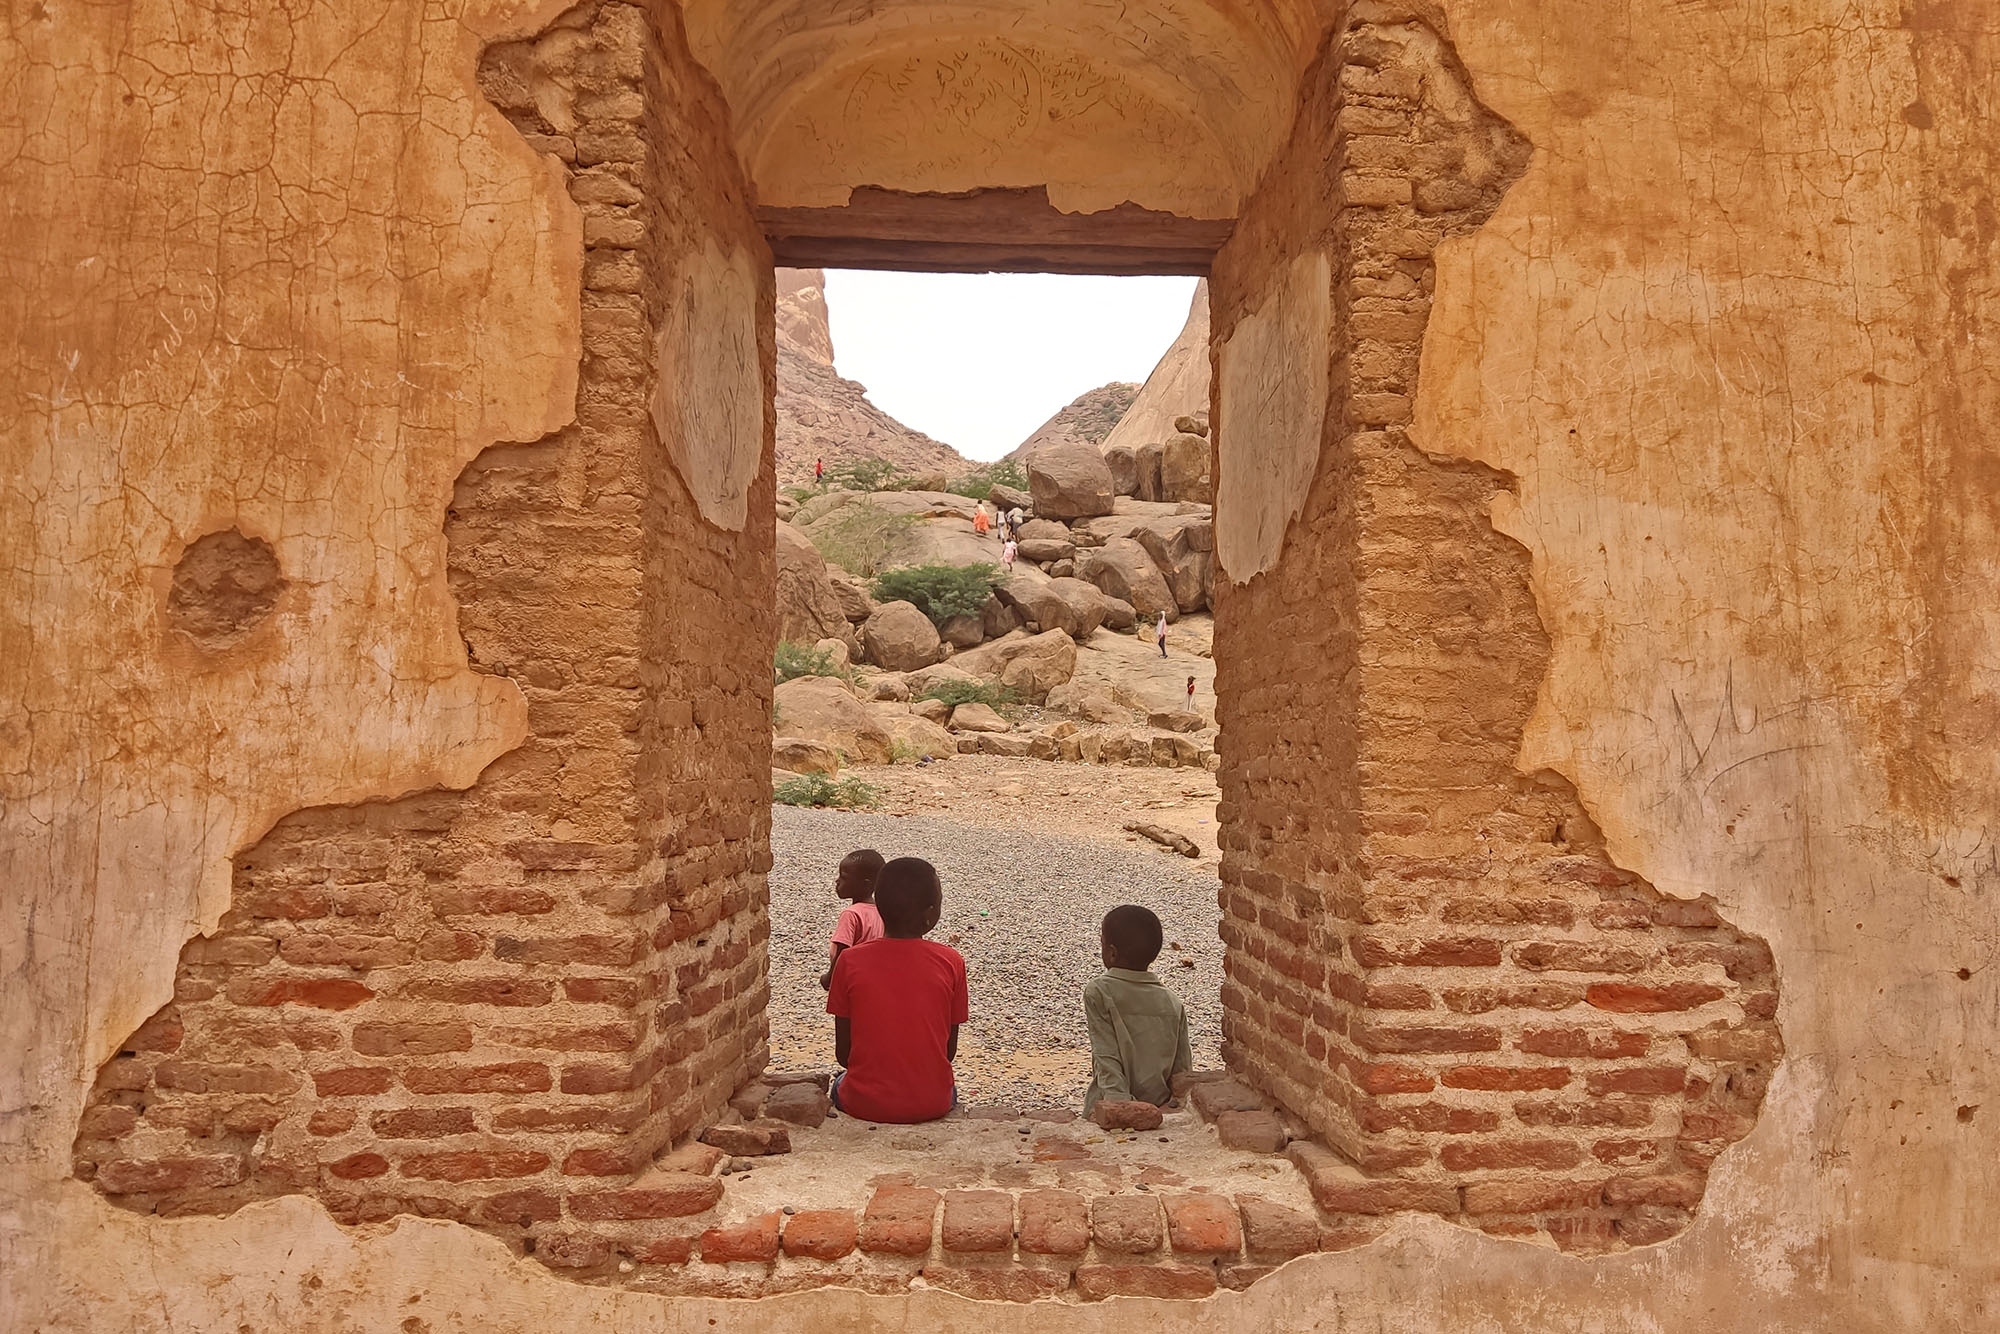 Kinder im Sudan